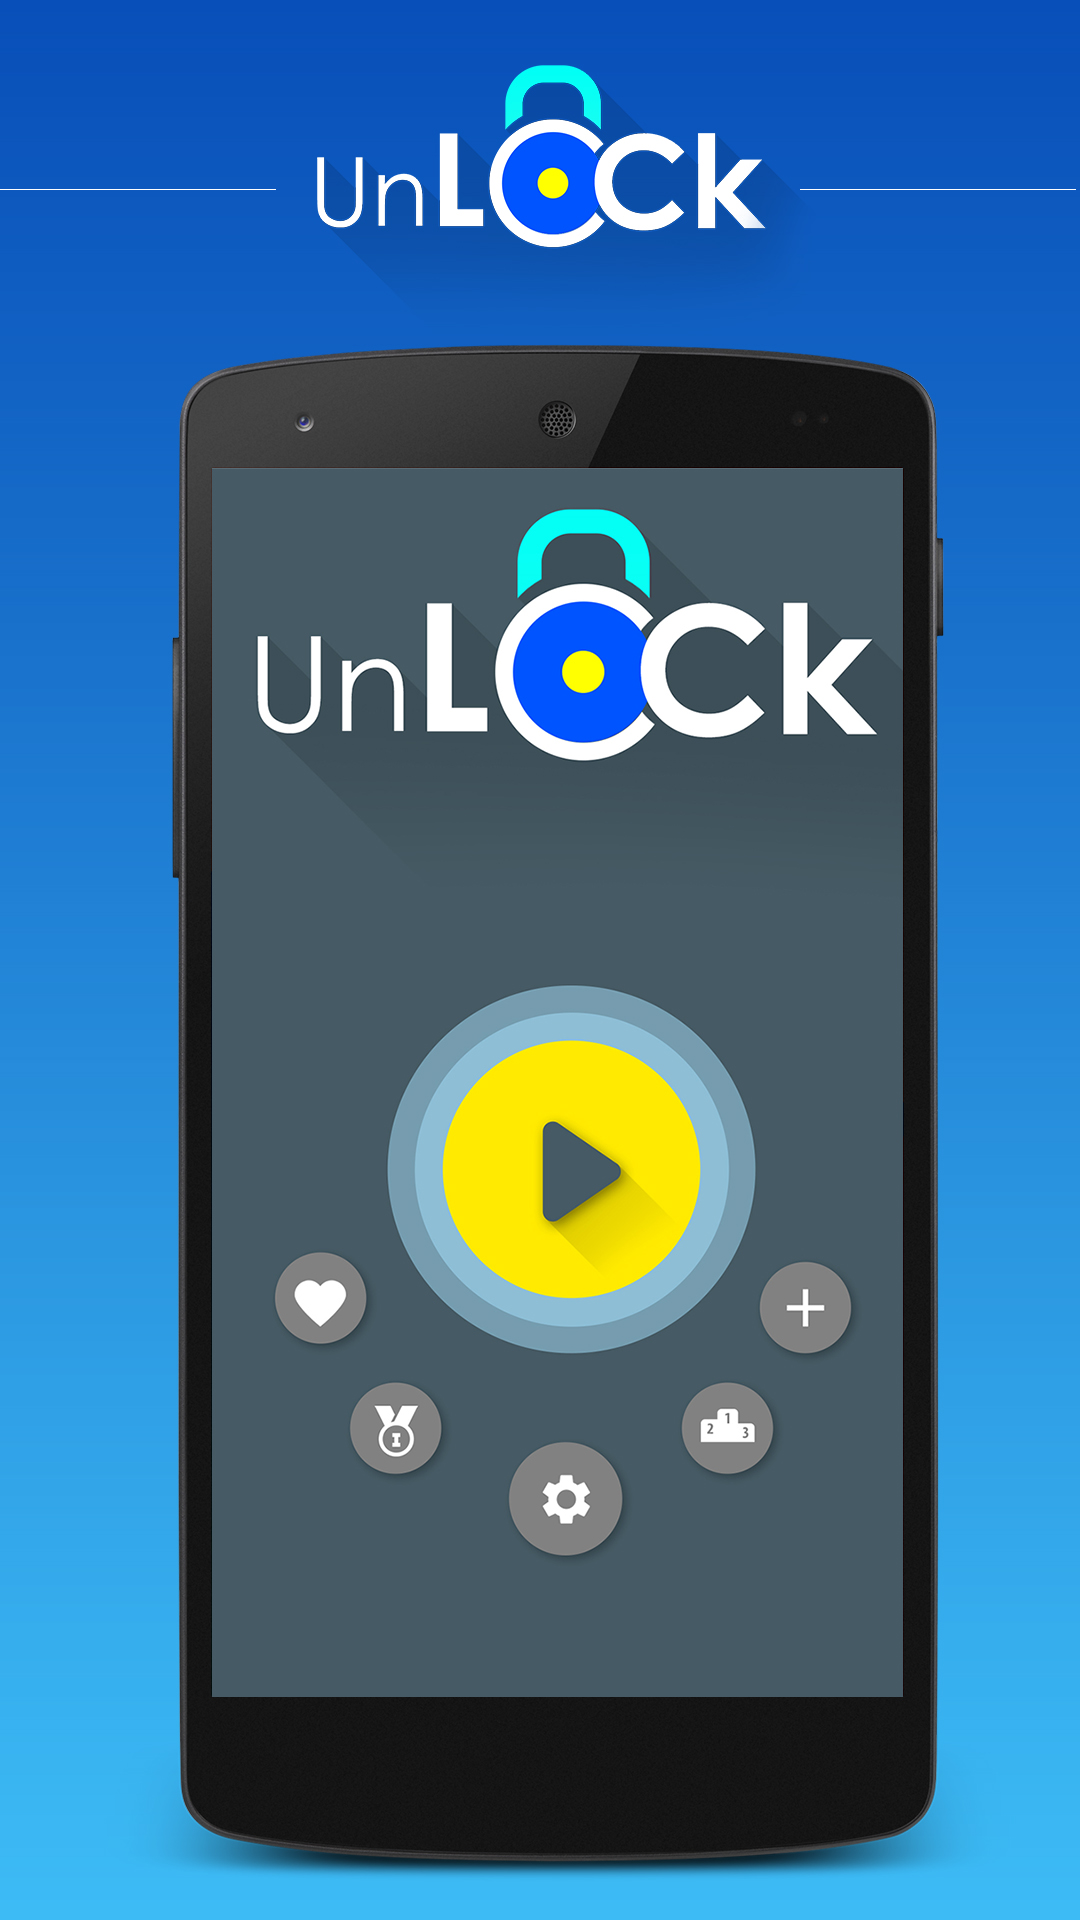 Unlock the lock